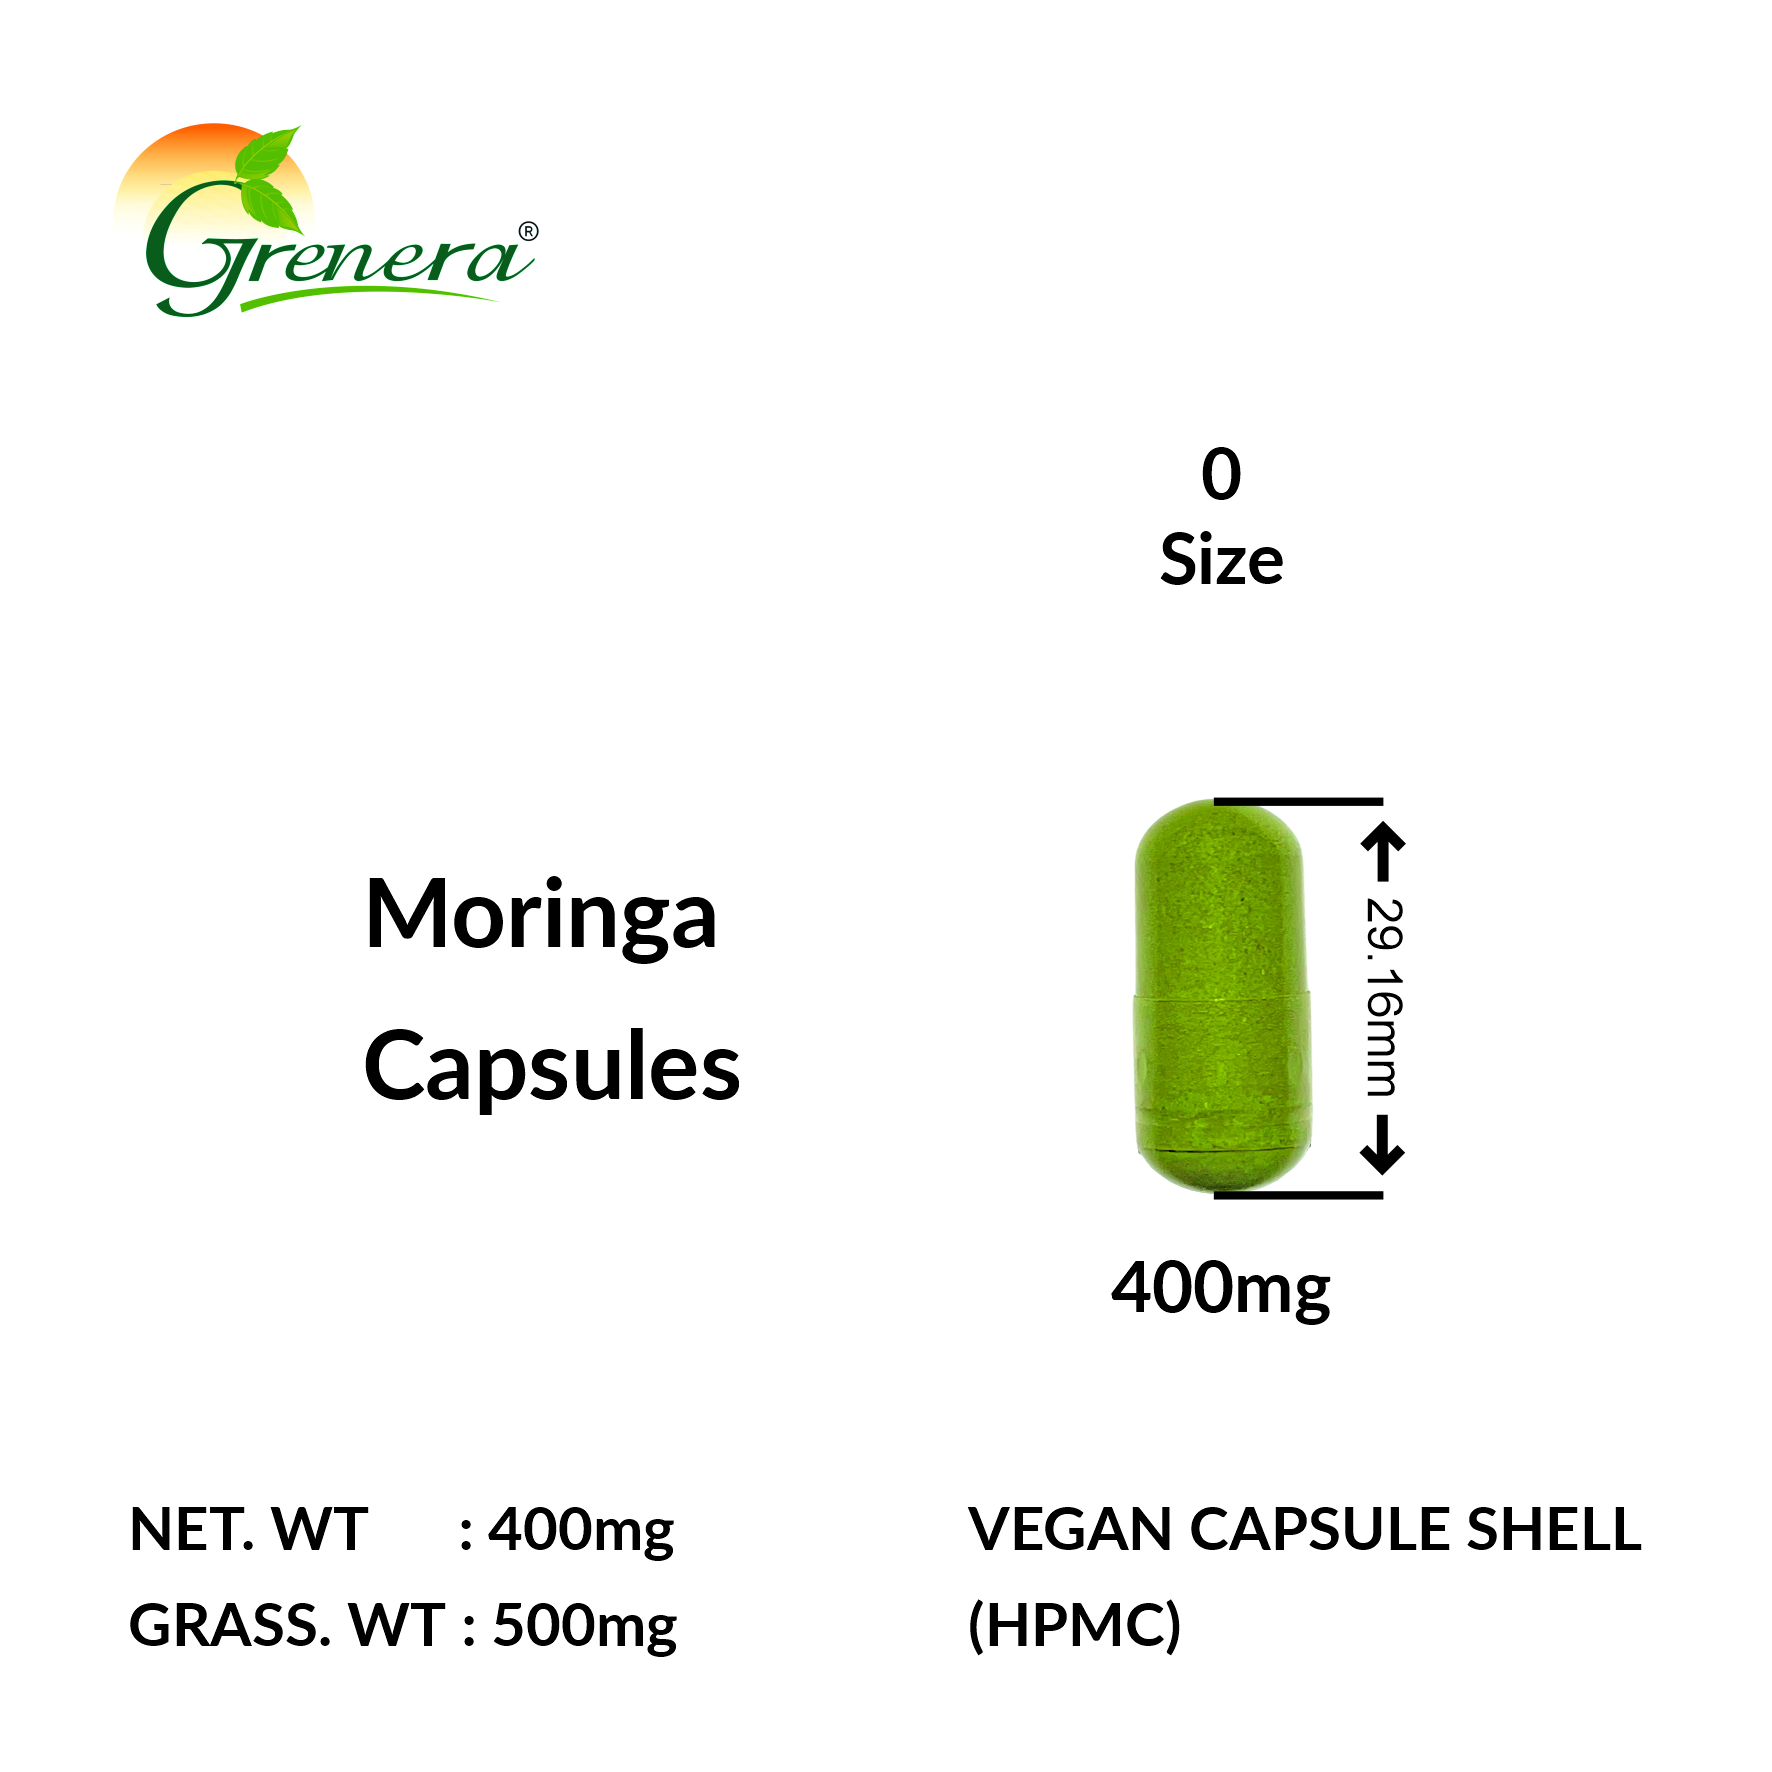 Moringa capsules 0 size